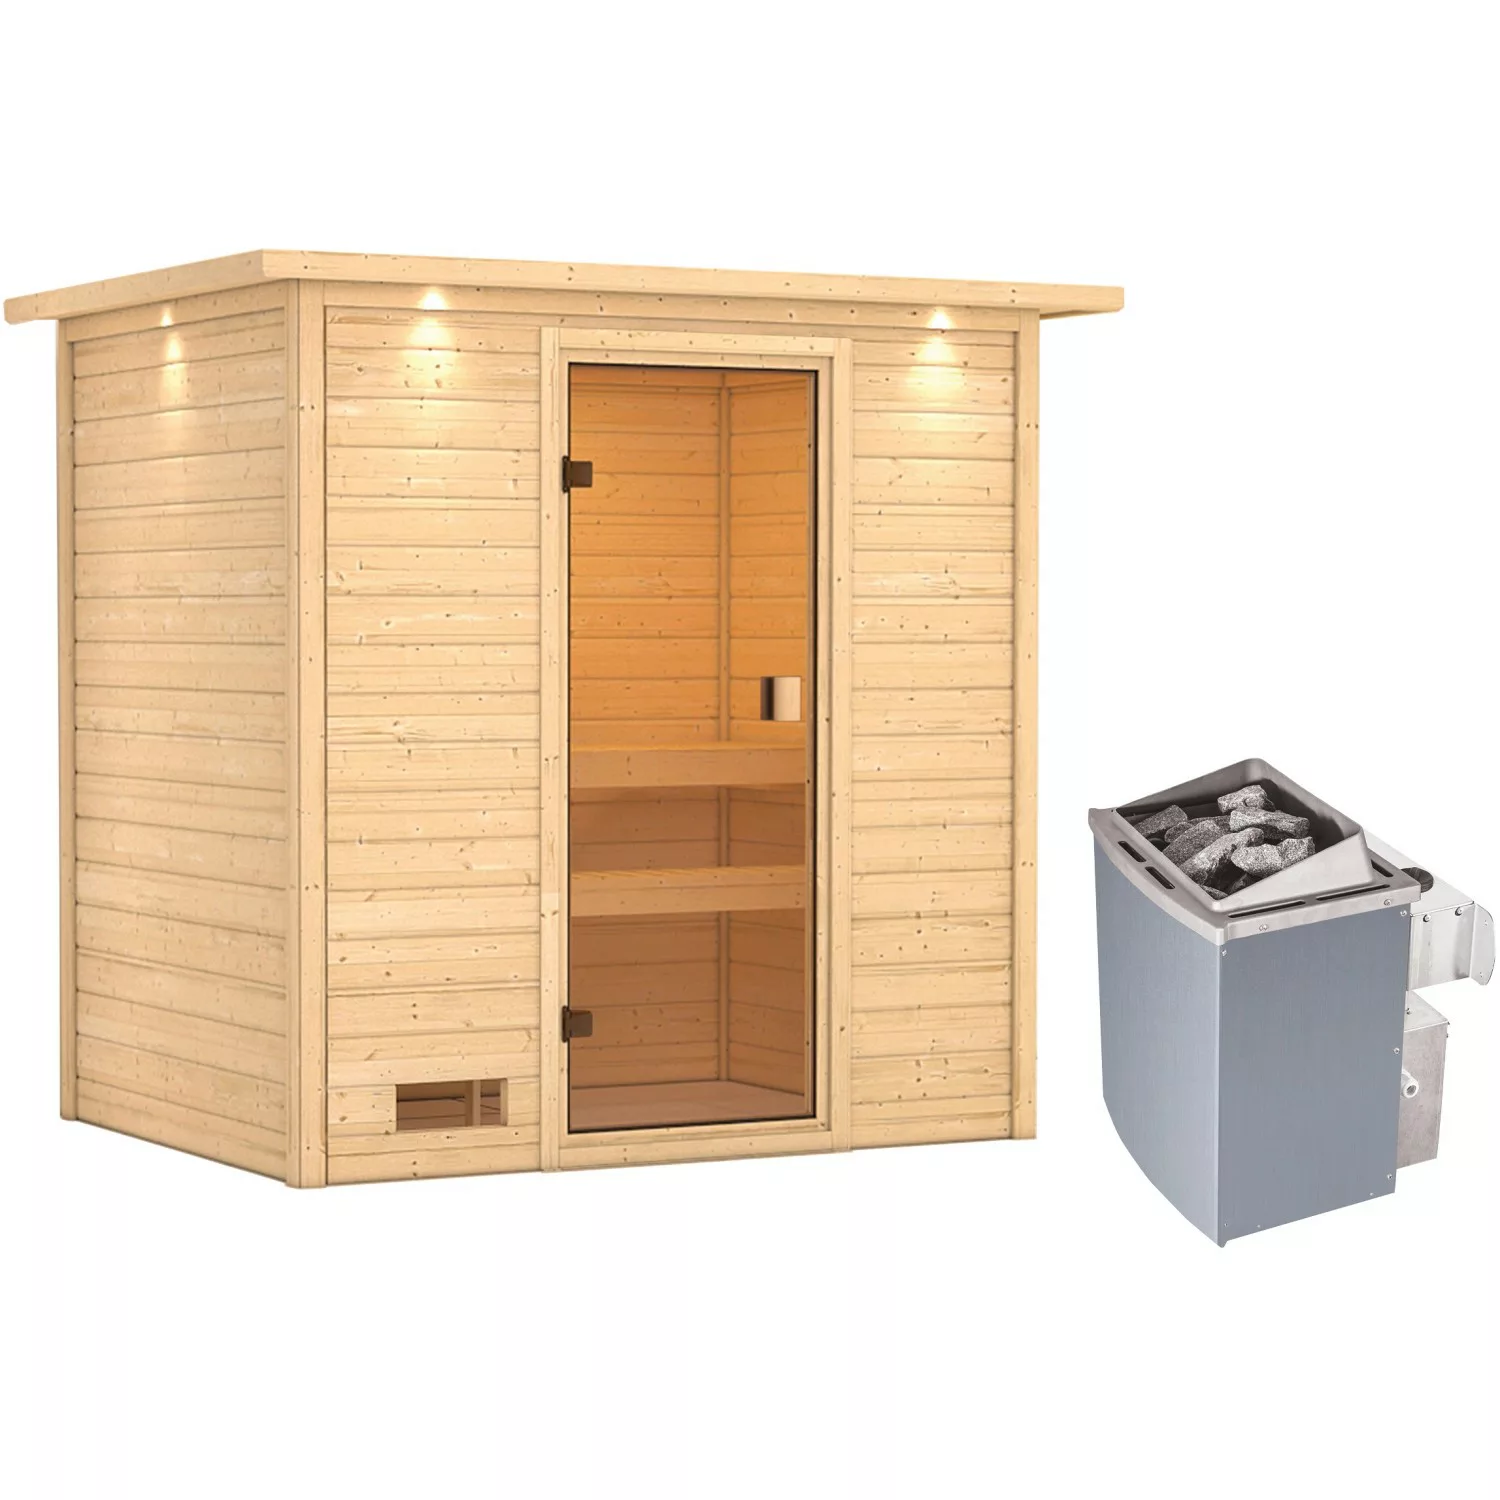 Woodfeeling Sauna Selena inkl. 9 kW Ofen mit integr. Strg., LED-Dachkranz günstig online kaufen